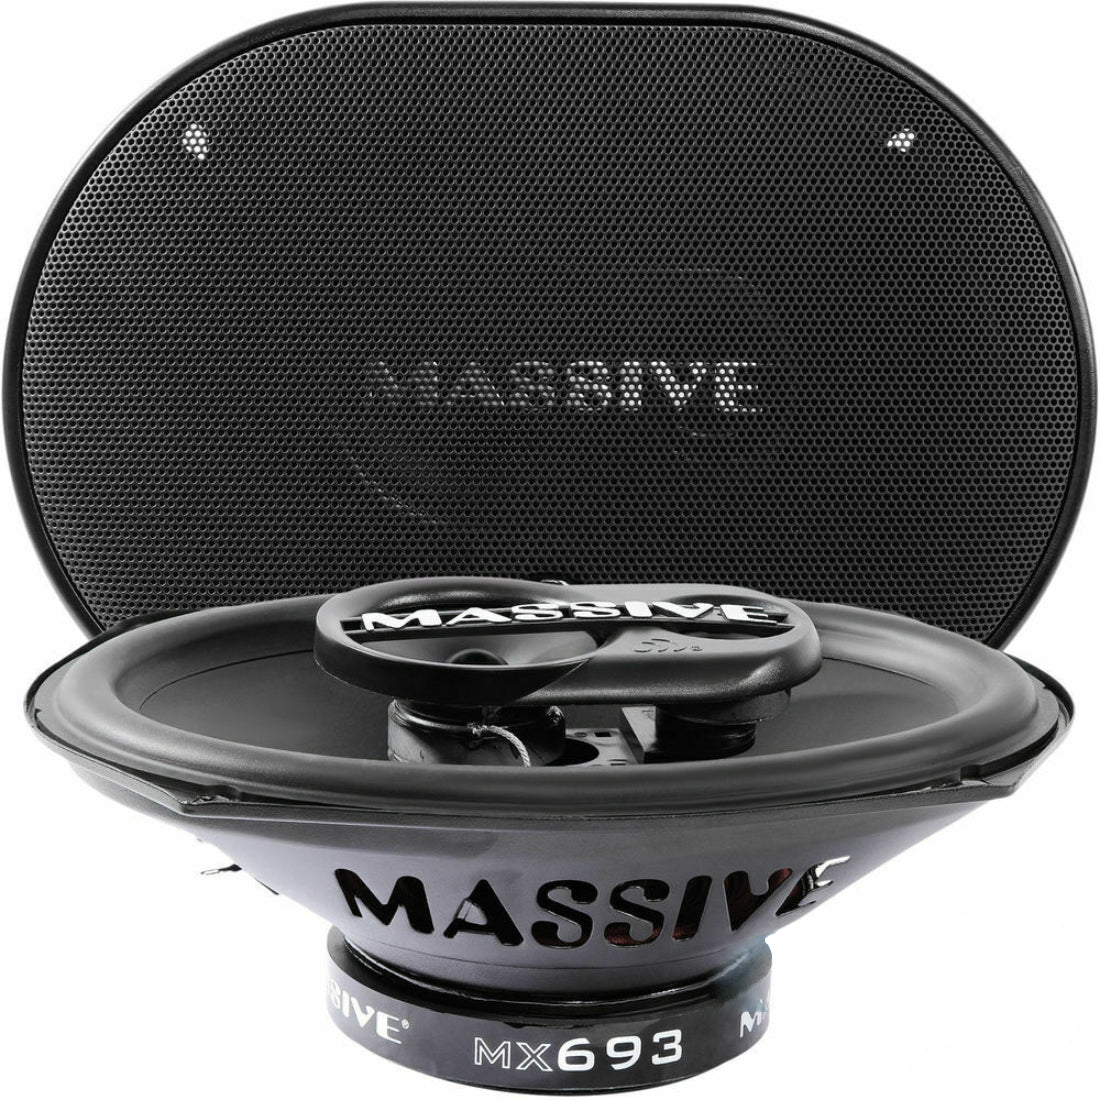 Massive Audio MX693 6" x 9" MX Series 3-Way Coaxial Car Speakers